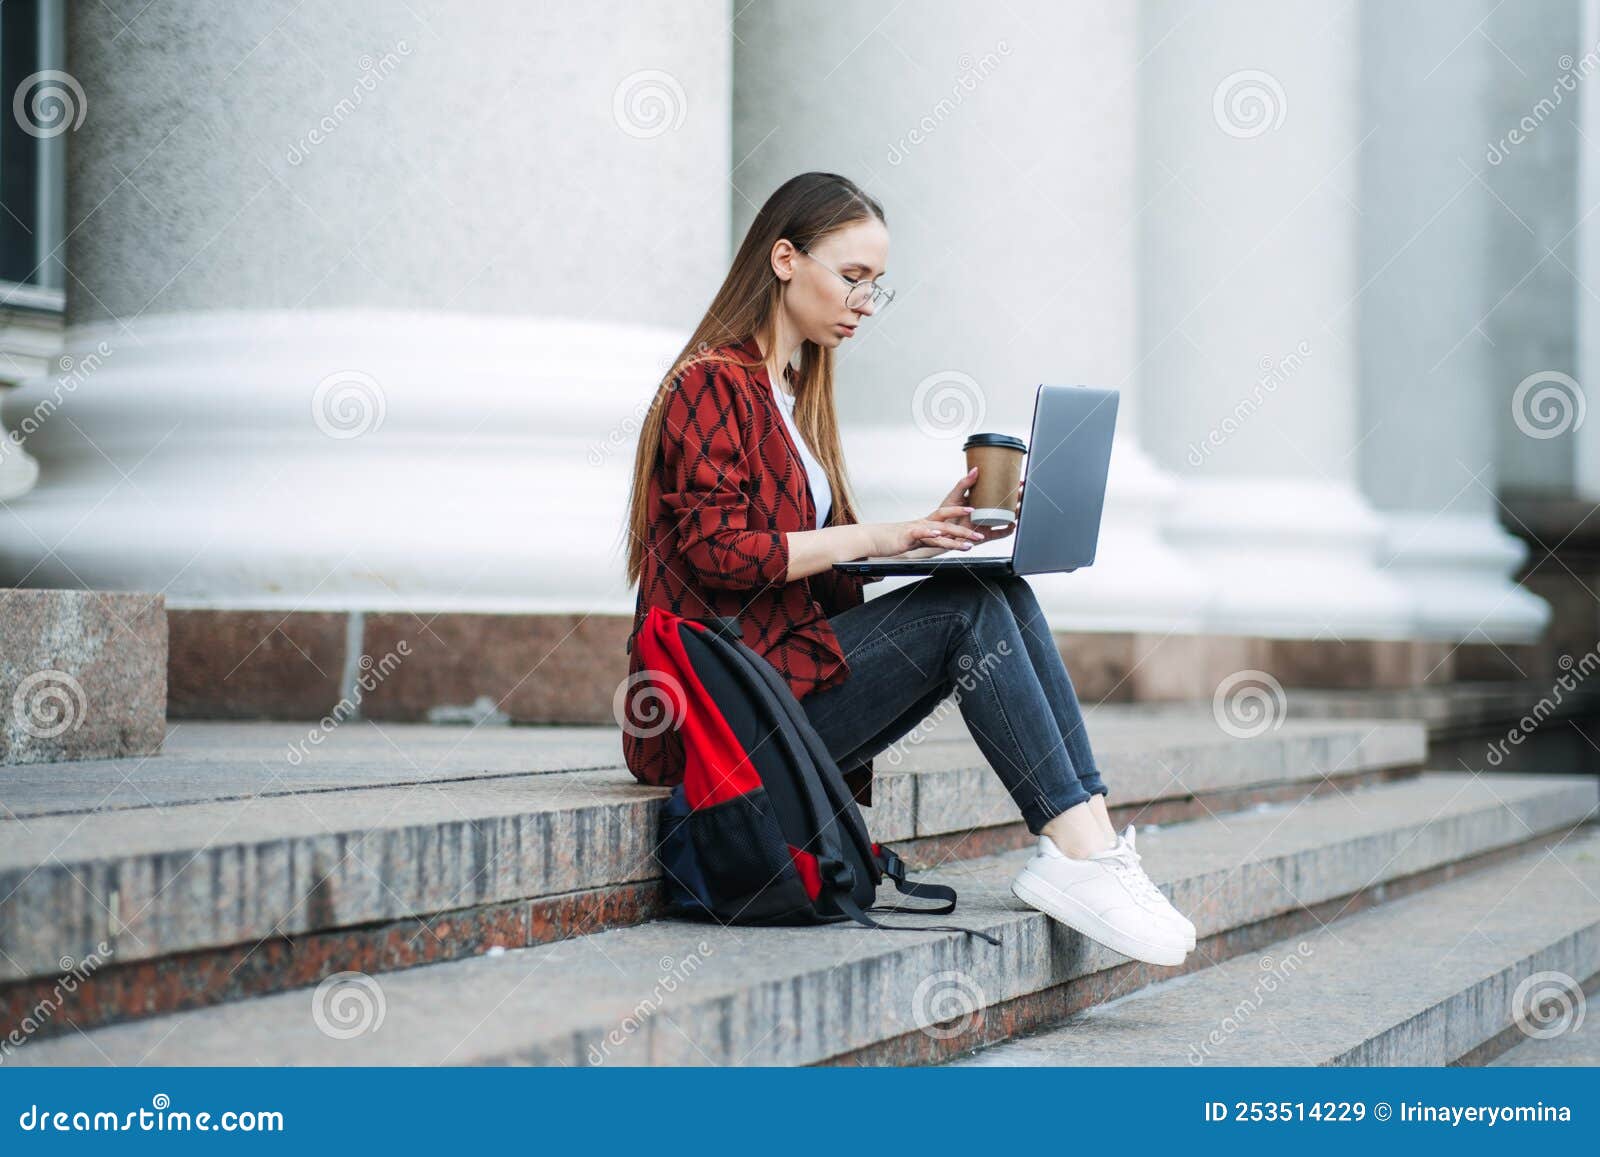 make money online, blogging, ebusiness. young woman, freelancer, student girl using laptop